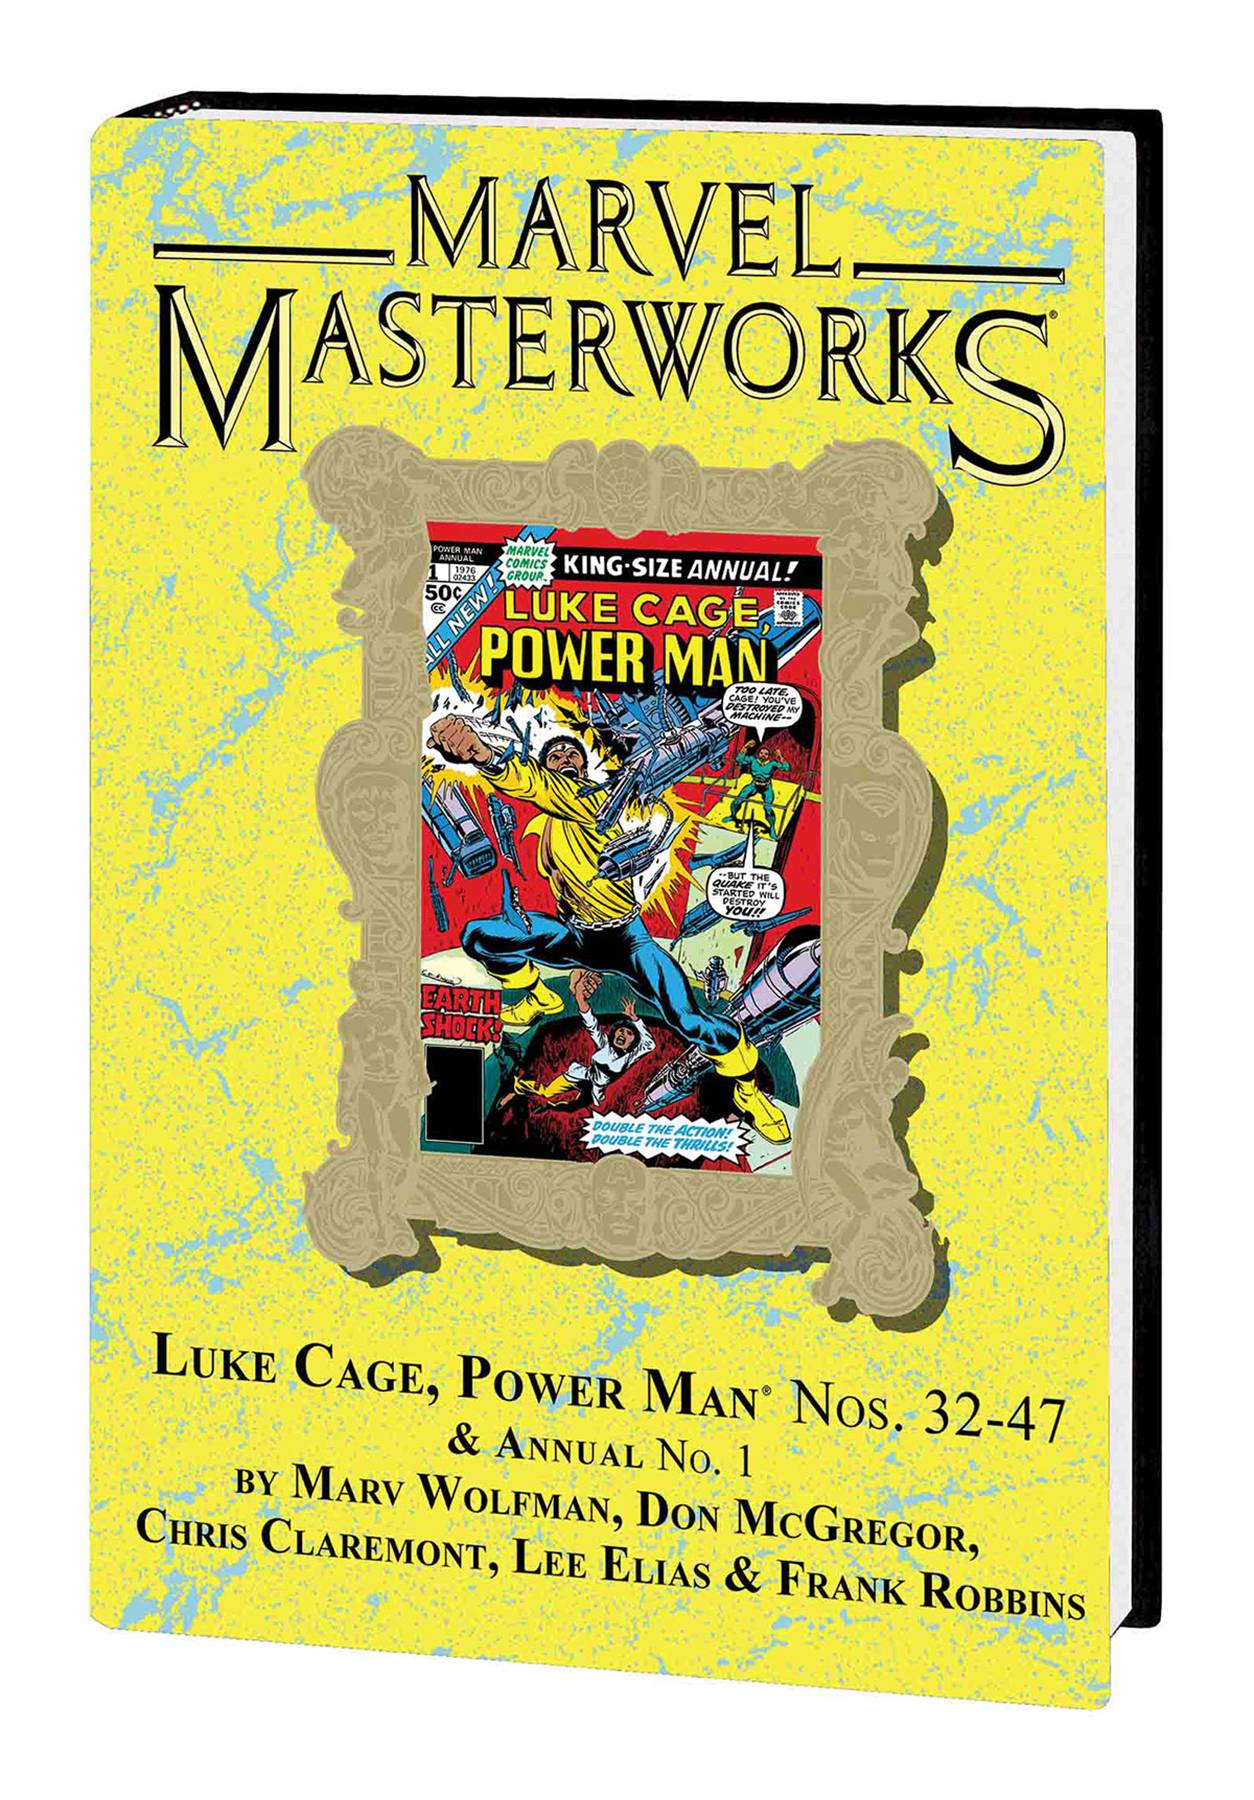 Marvel Masterworks Luke Cage Power Man Hardcover Volume 3 Direct Market Edition Edition 271